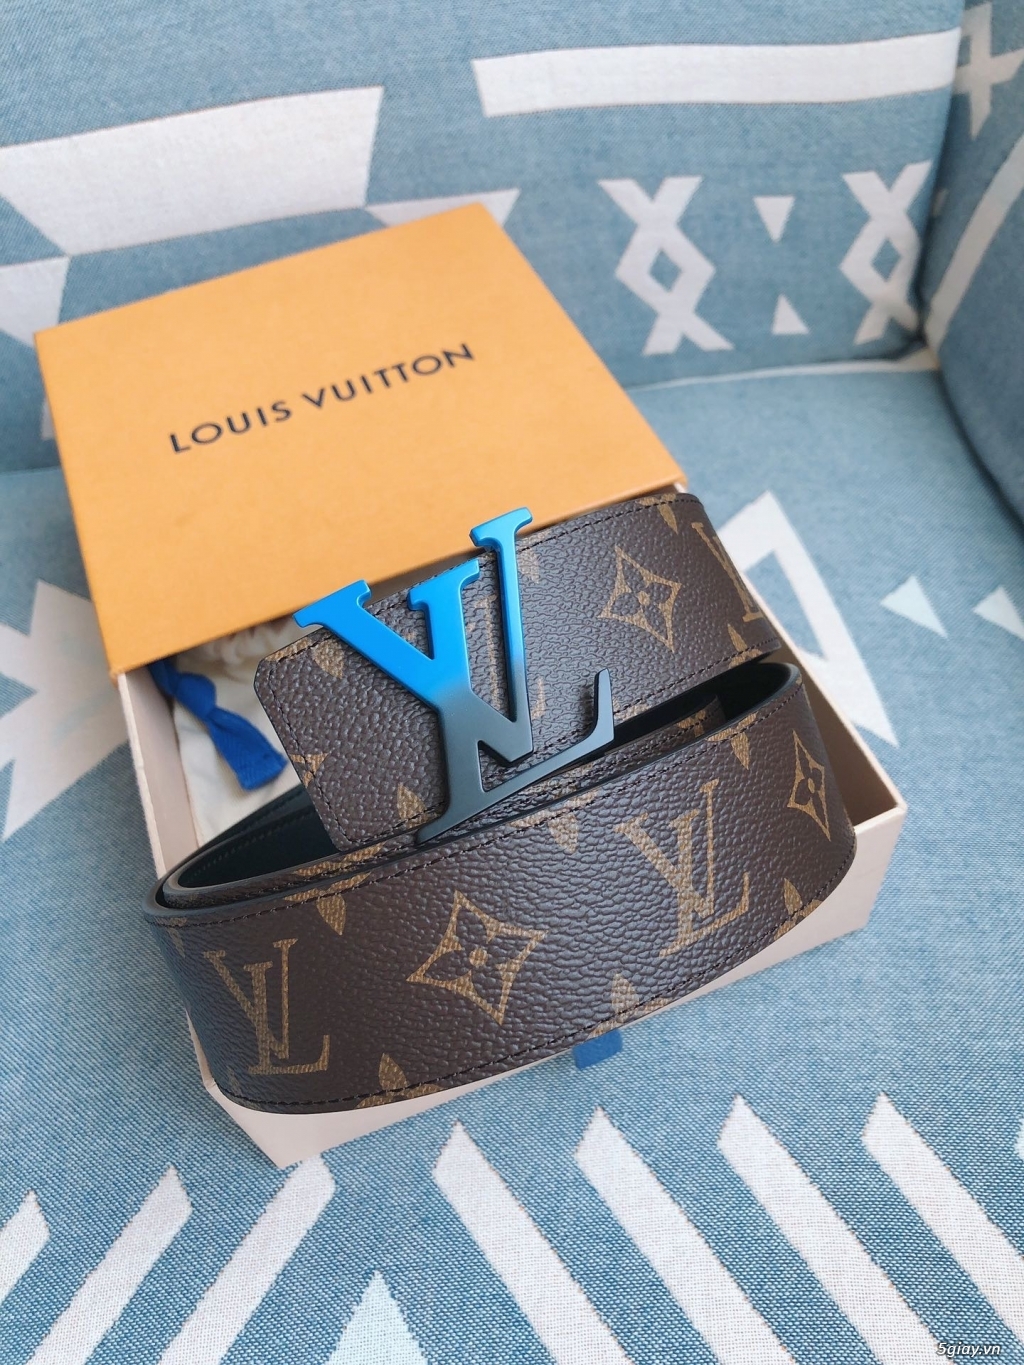 Dây nịt Louis Vuitton hàng fake order ko có sẵn - 15